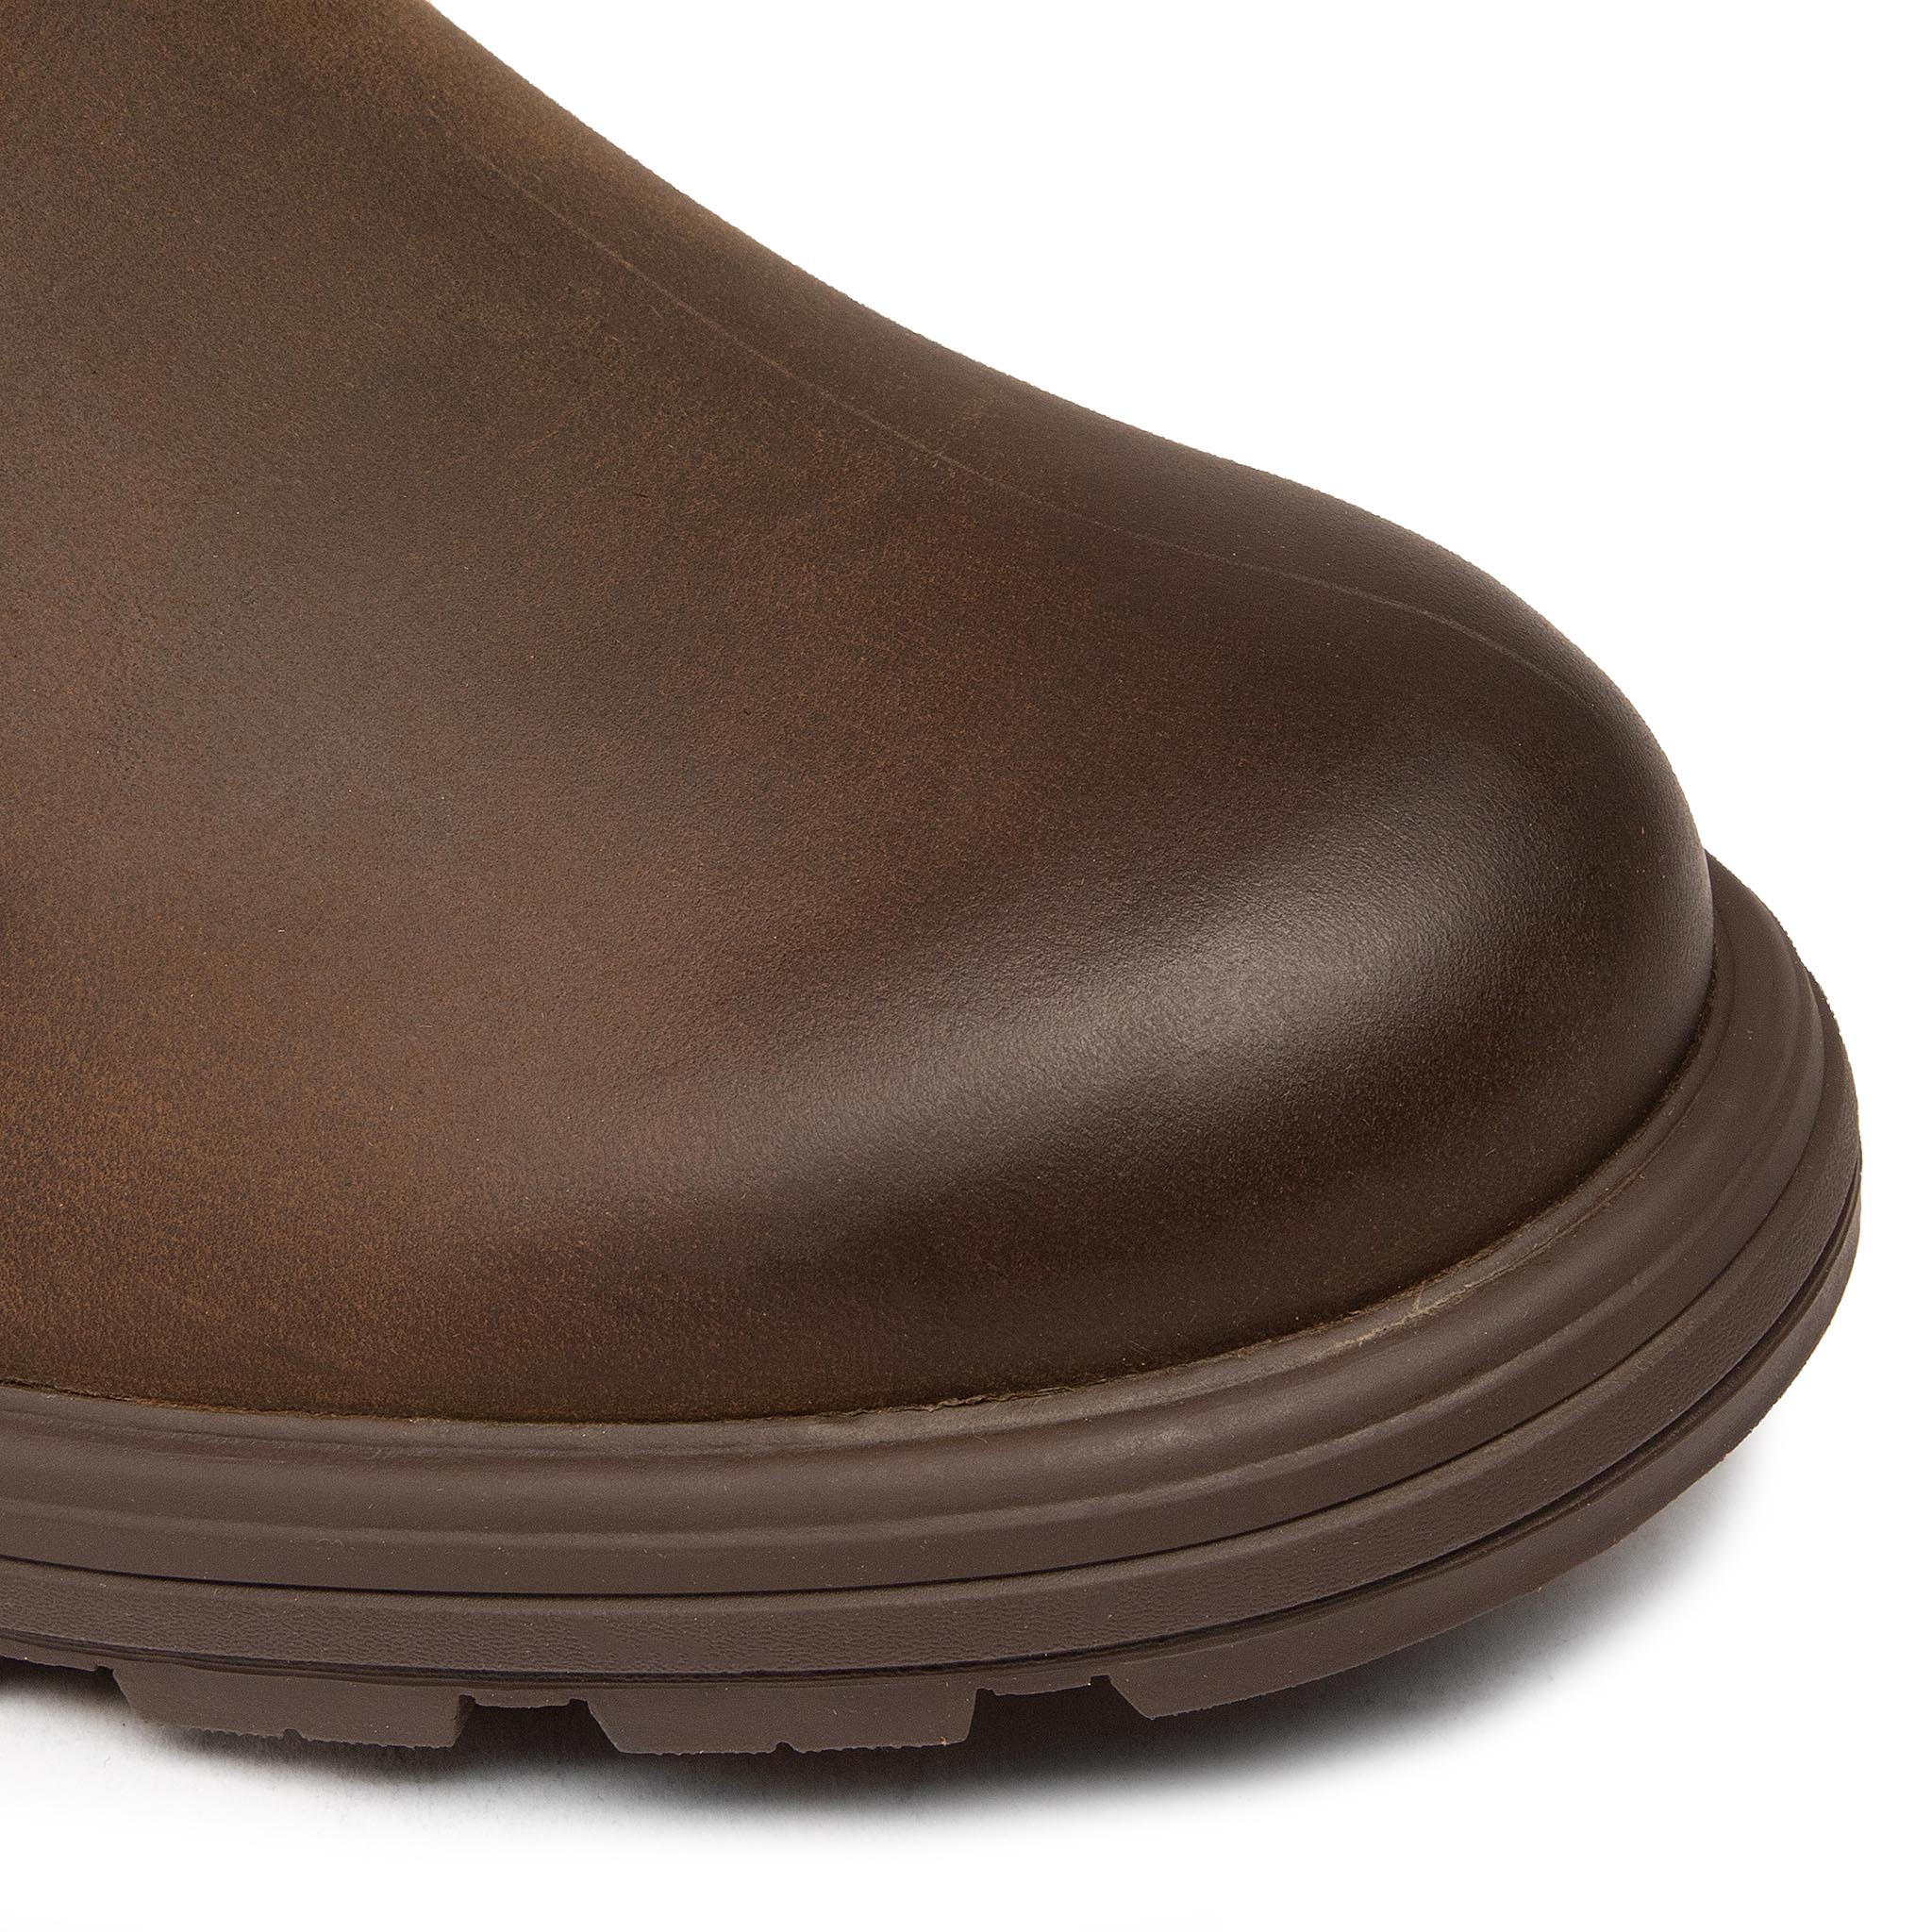 Kotníková obuv s elastickým prvkem UGG - M Biltmore Chelsea 1103789 Oak